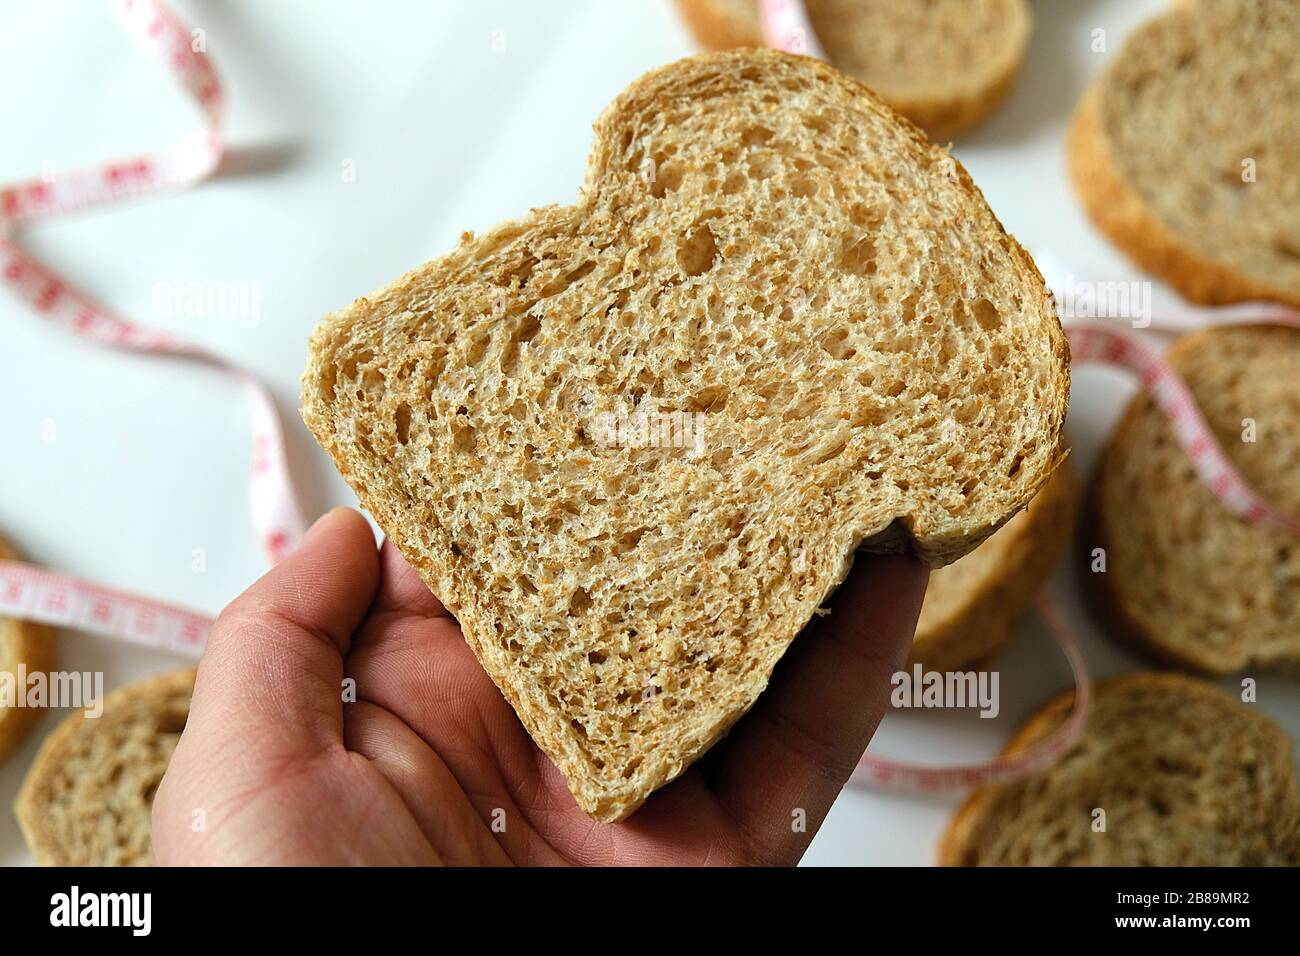 https://c8.alamy.com/comp/2B89MR2/diet-and-bran-bread-bran-bread-for-weight-loss-bran-bread-for-old-people-2B89MR2.jpg